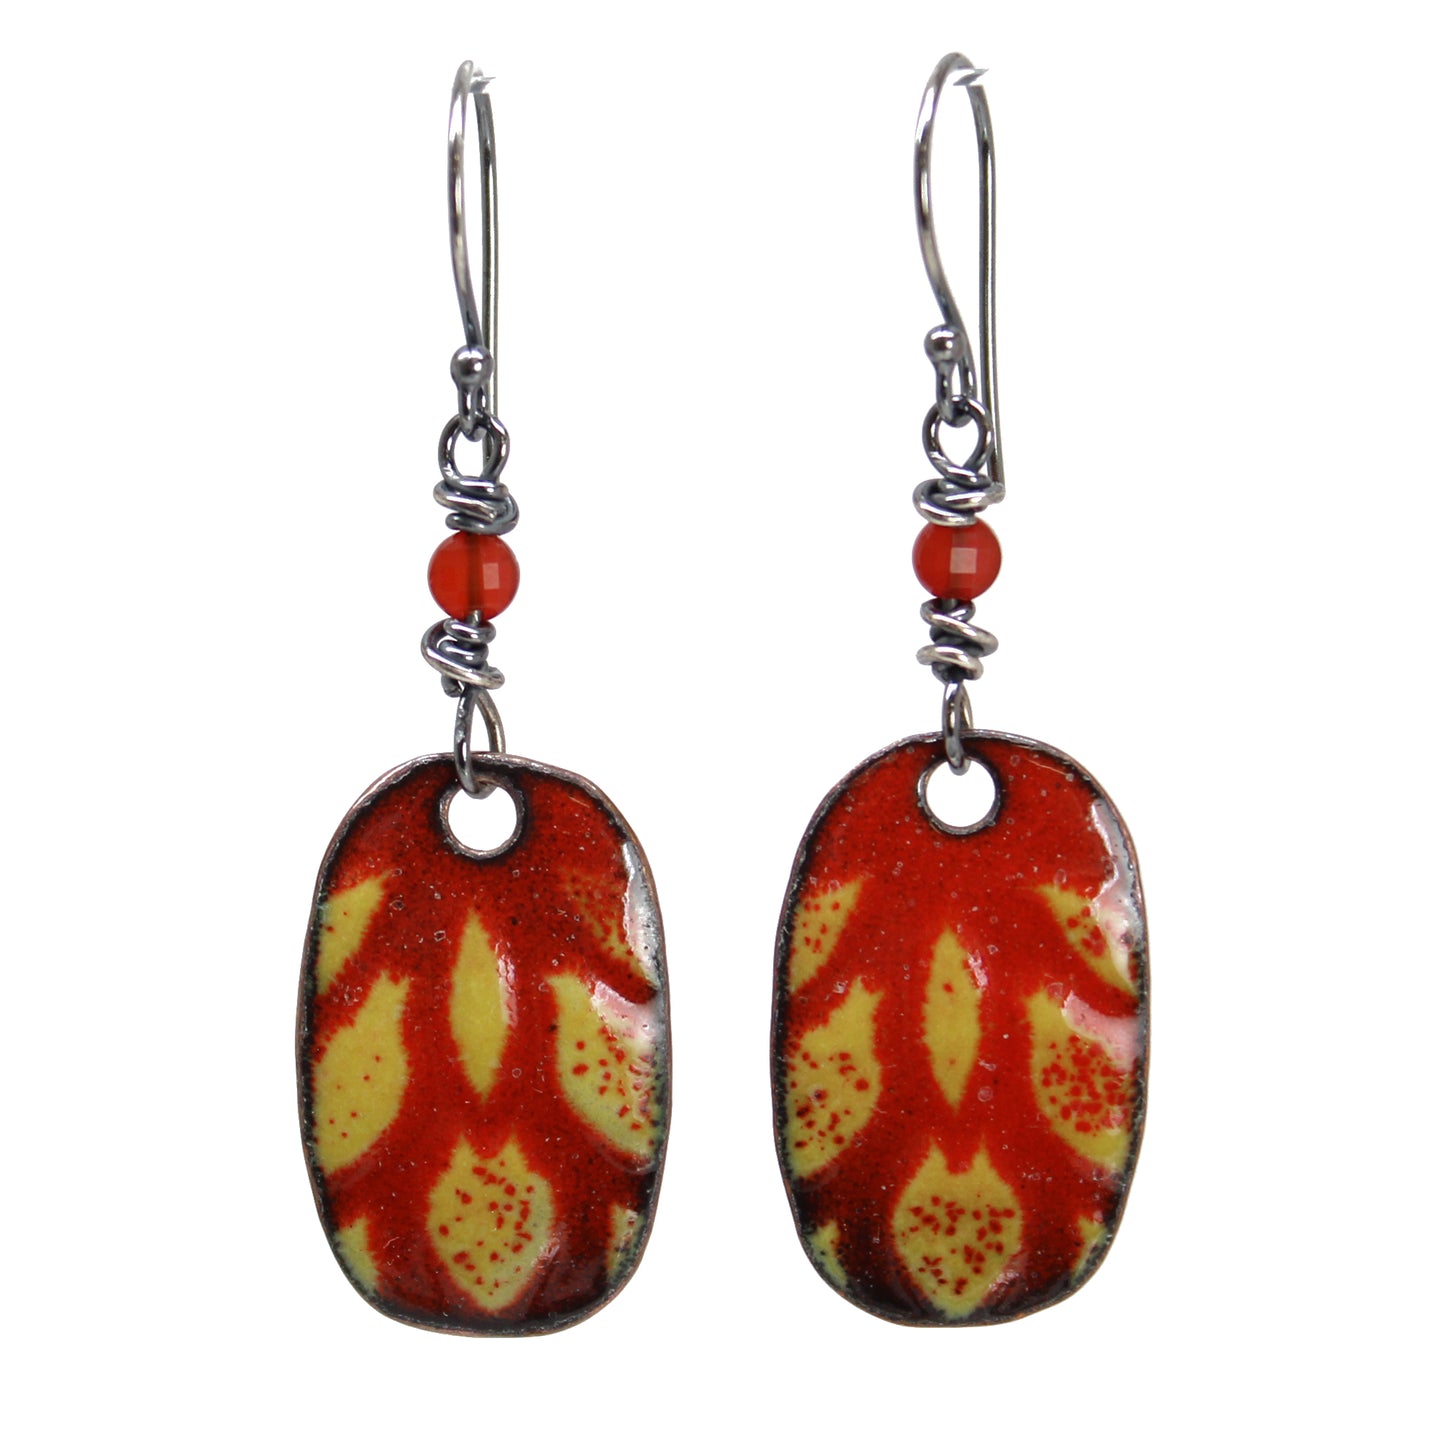 Red Enamel Dangle Earrings with Sterling Silver Ear Wires – Kathy